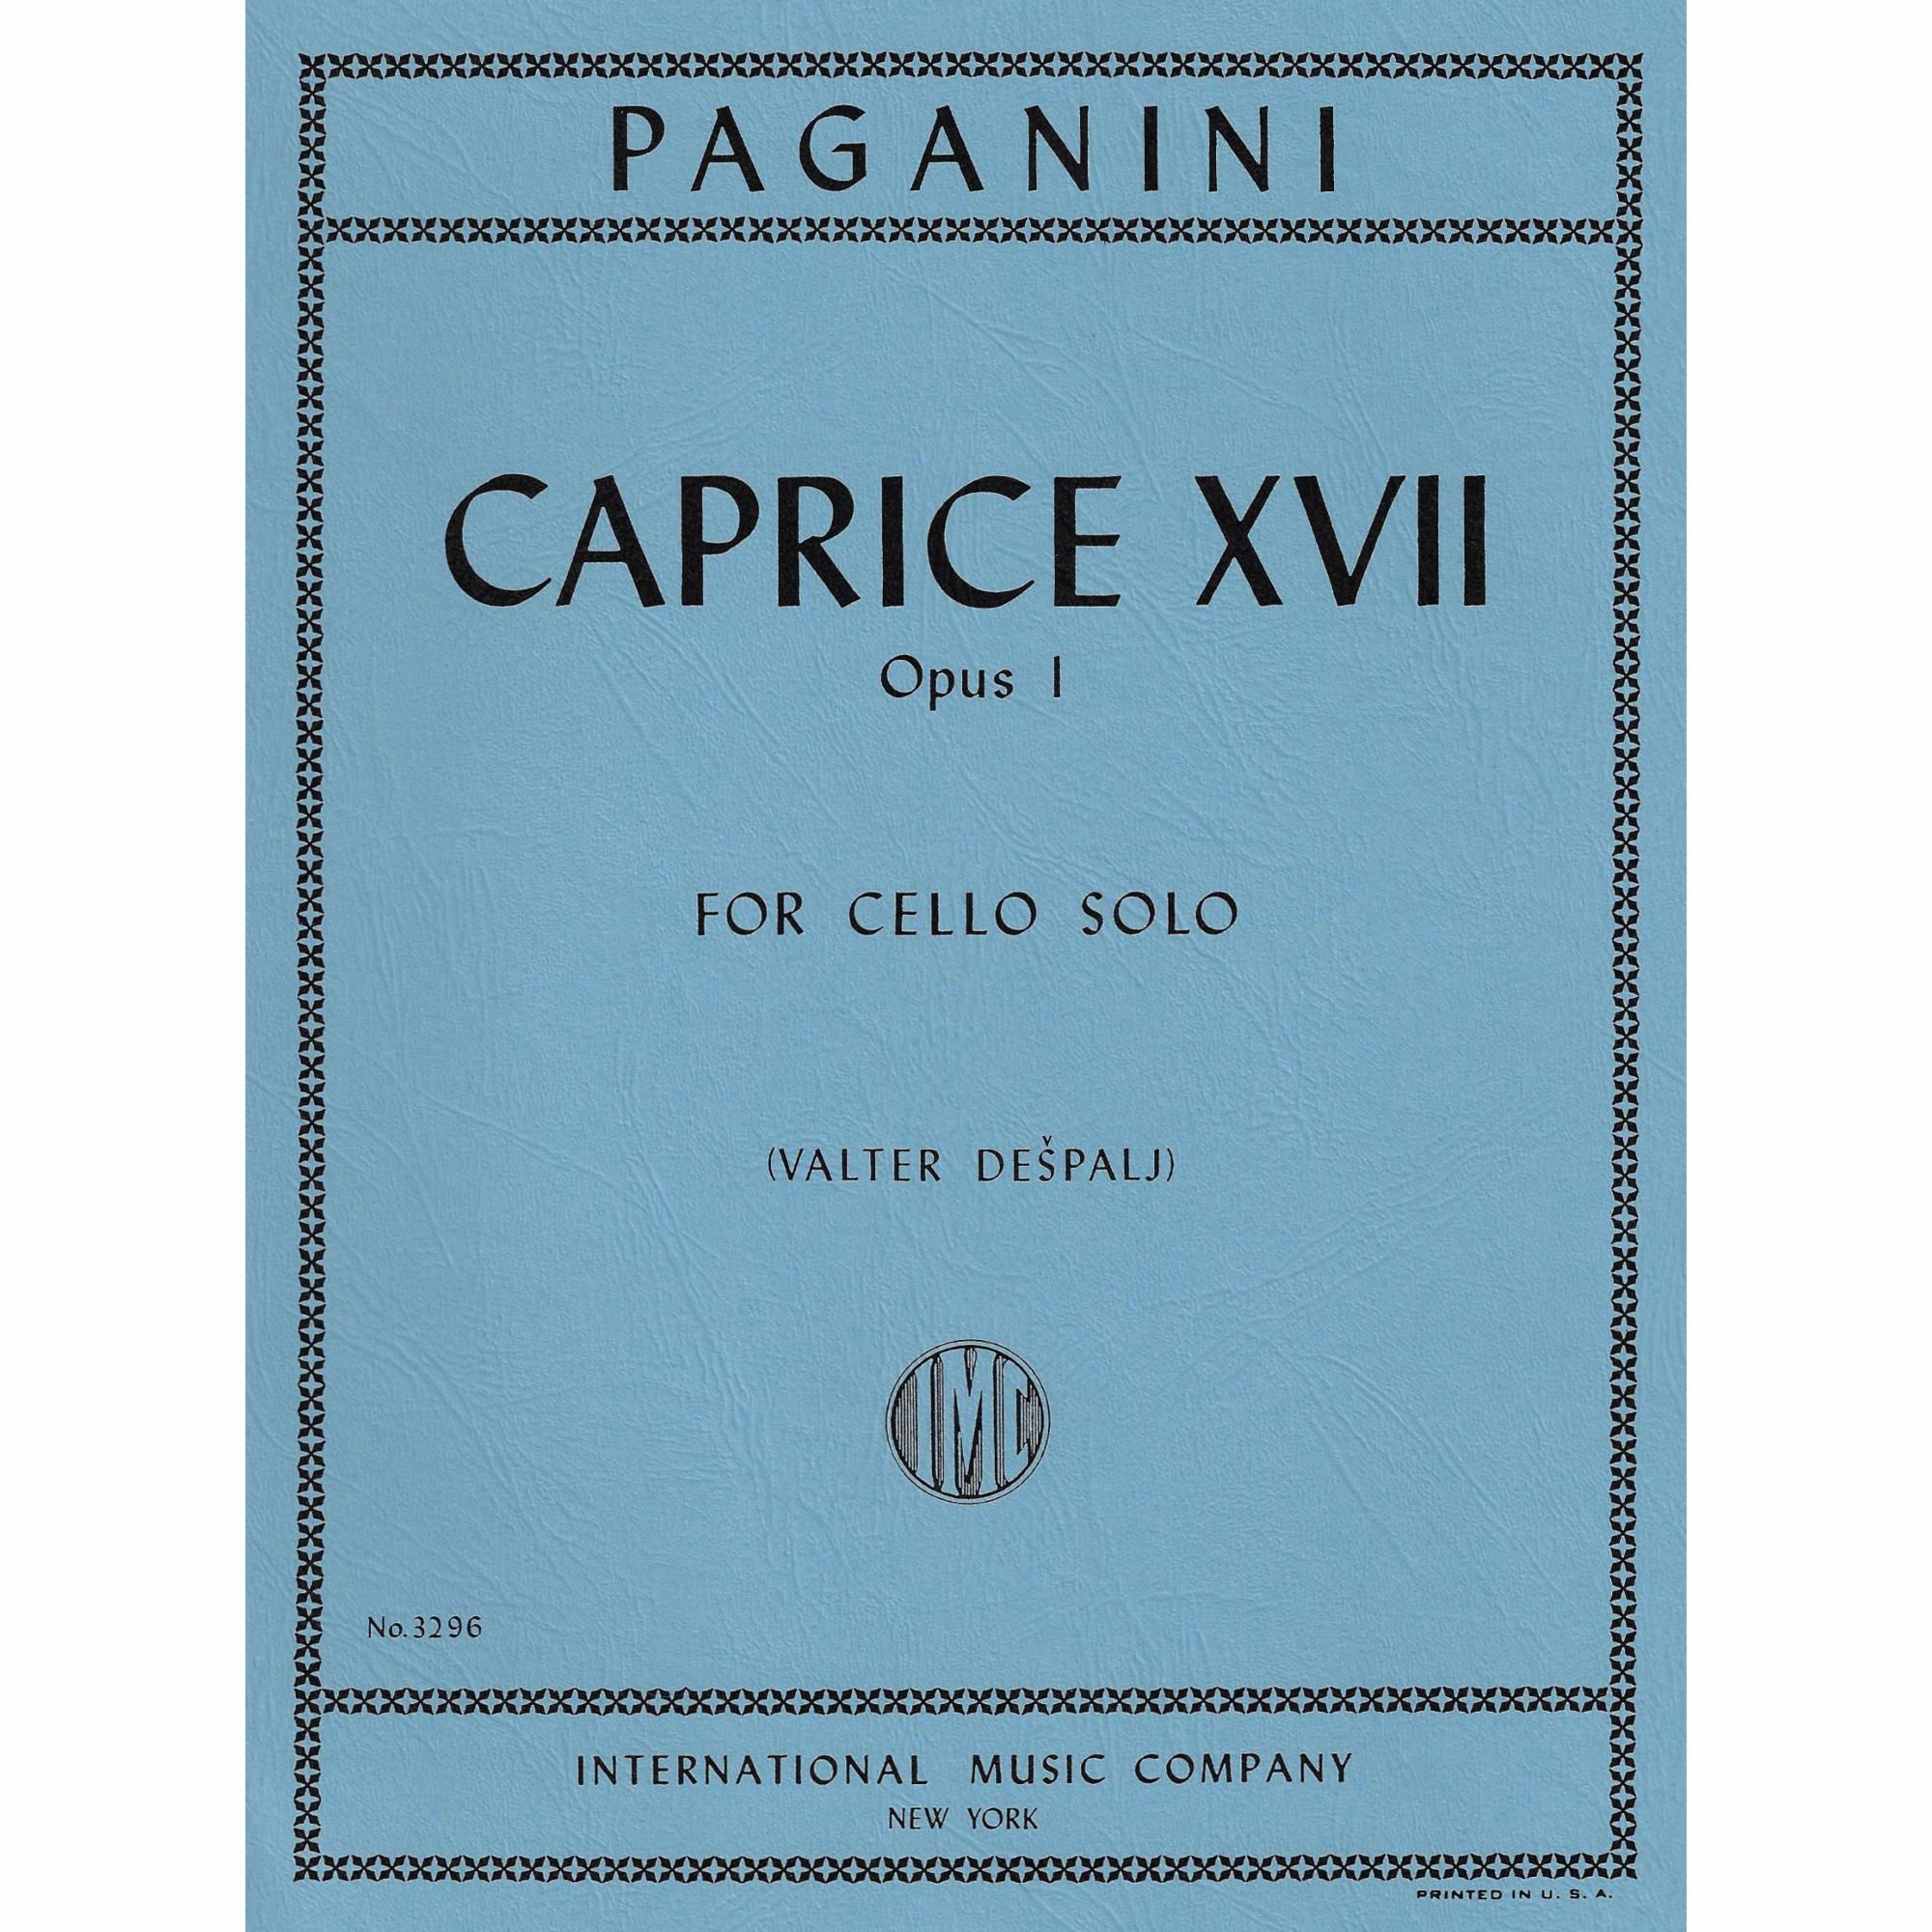 Paganini -- Caprice XVII, from Op. 1 Solo Cello